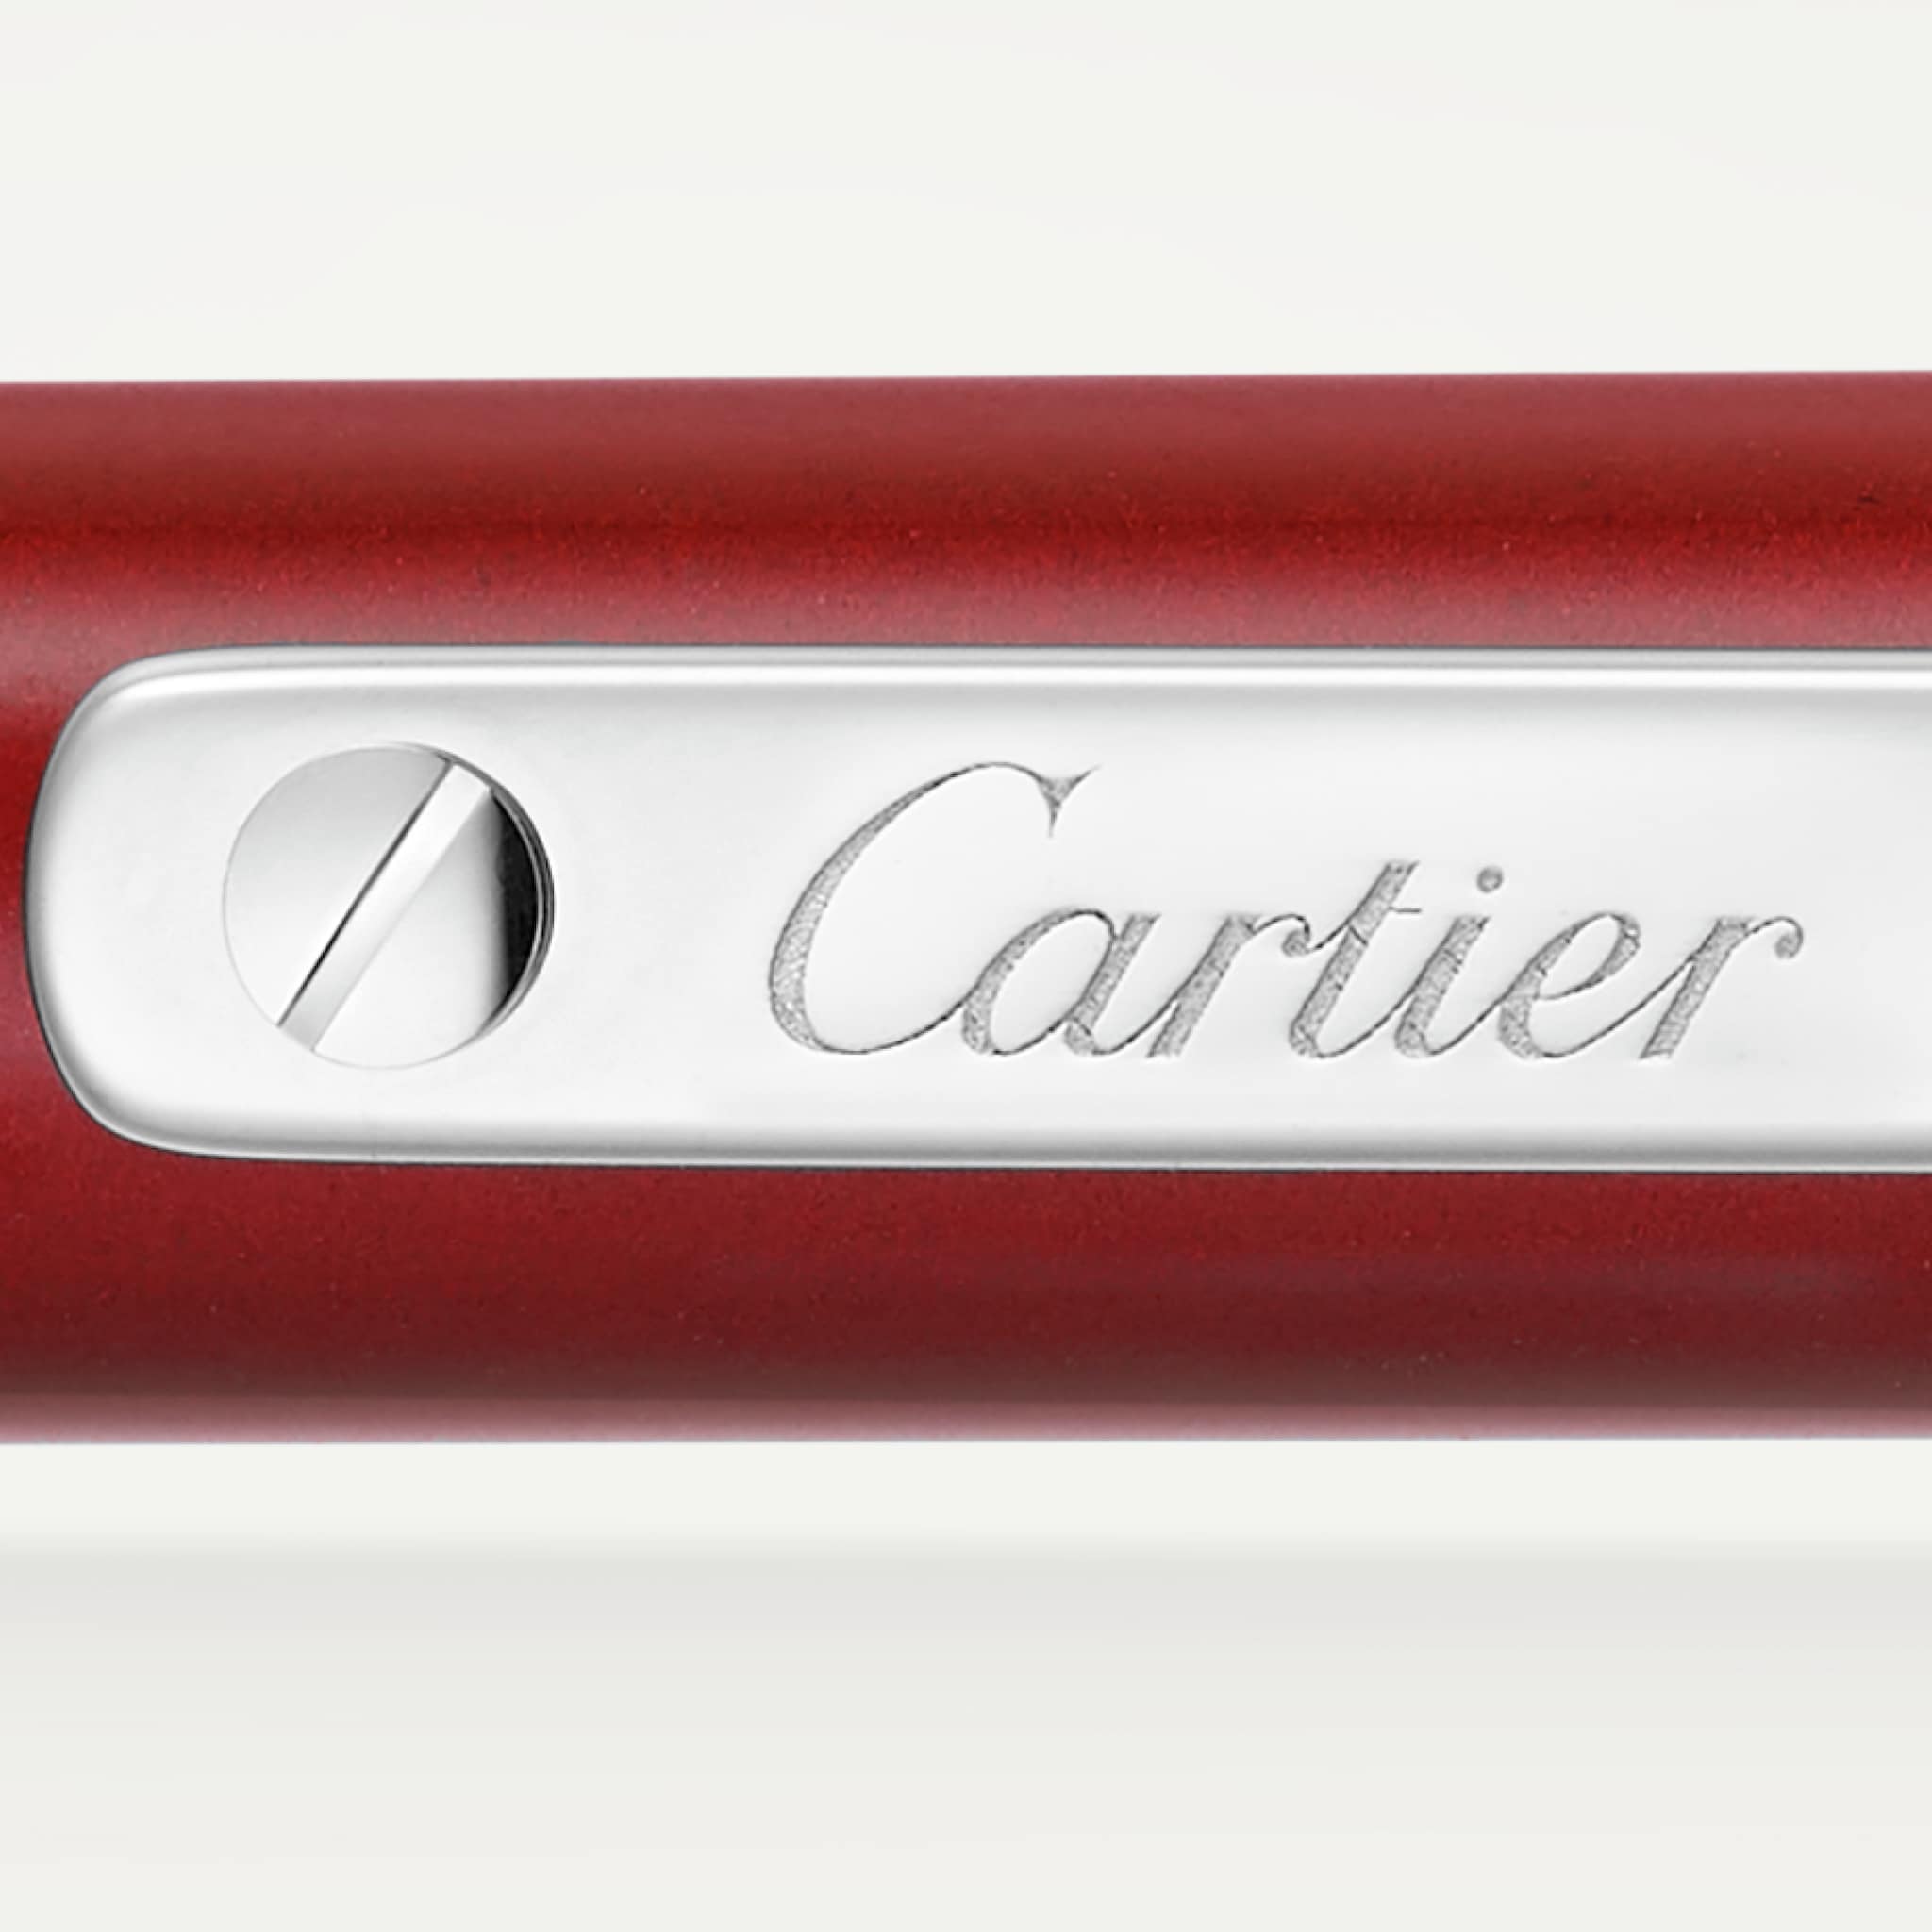 Santos de Cartier penSmall model, red lacquer, palladium finish